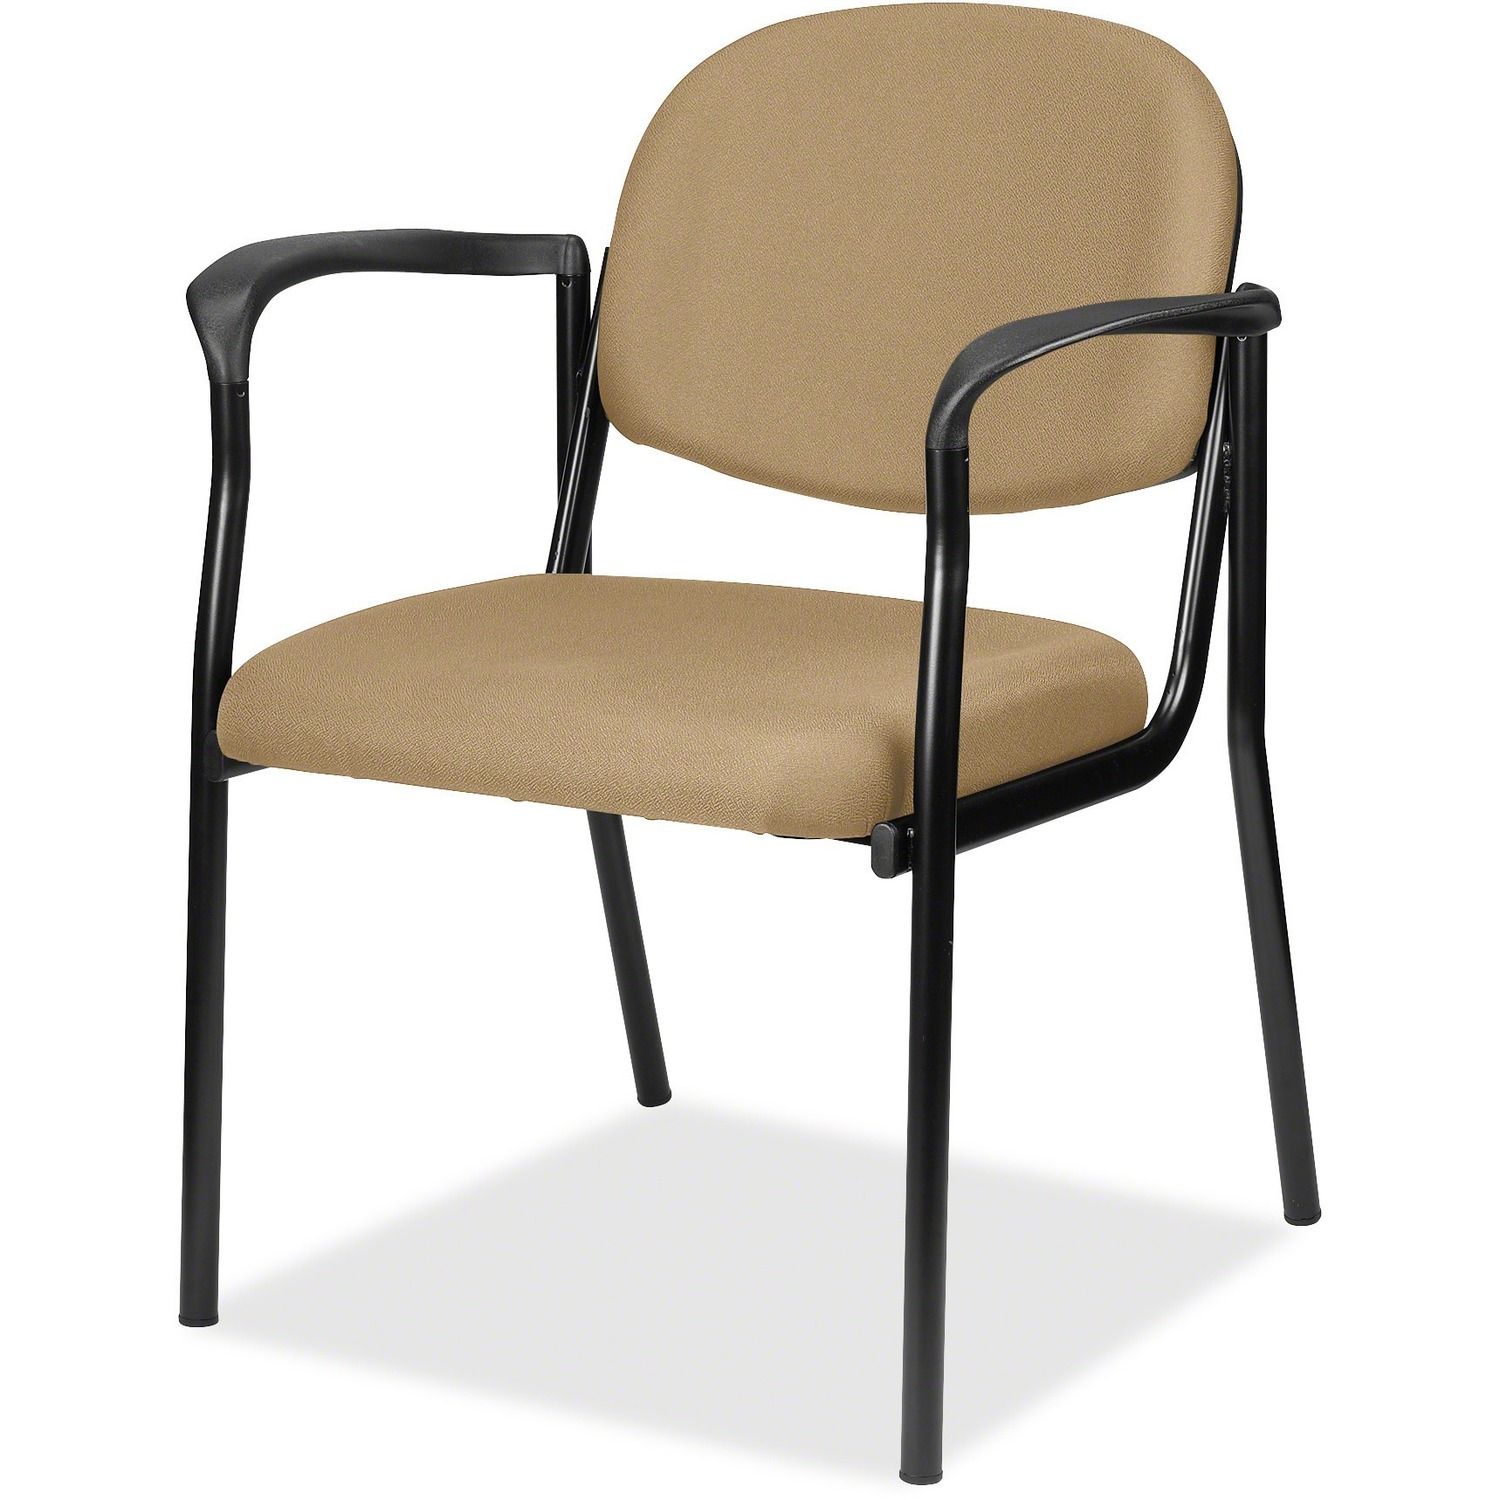 Dakota 8011 Guest Chair Beige Fabric Seat, Beige Fabric Back, Steel Frame, Four-legged Base, 1 Each